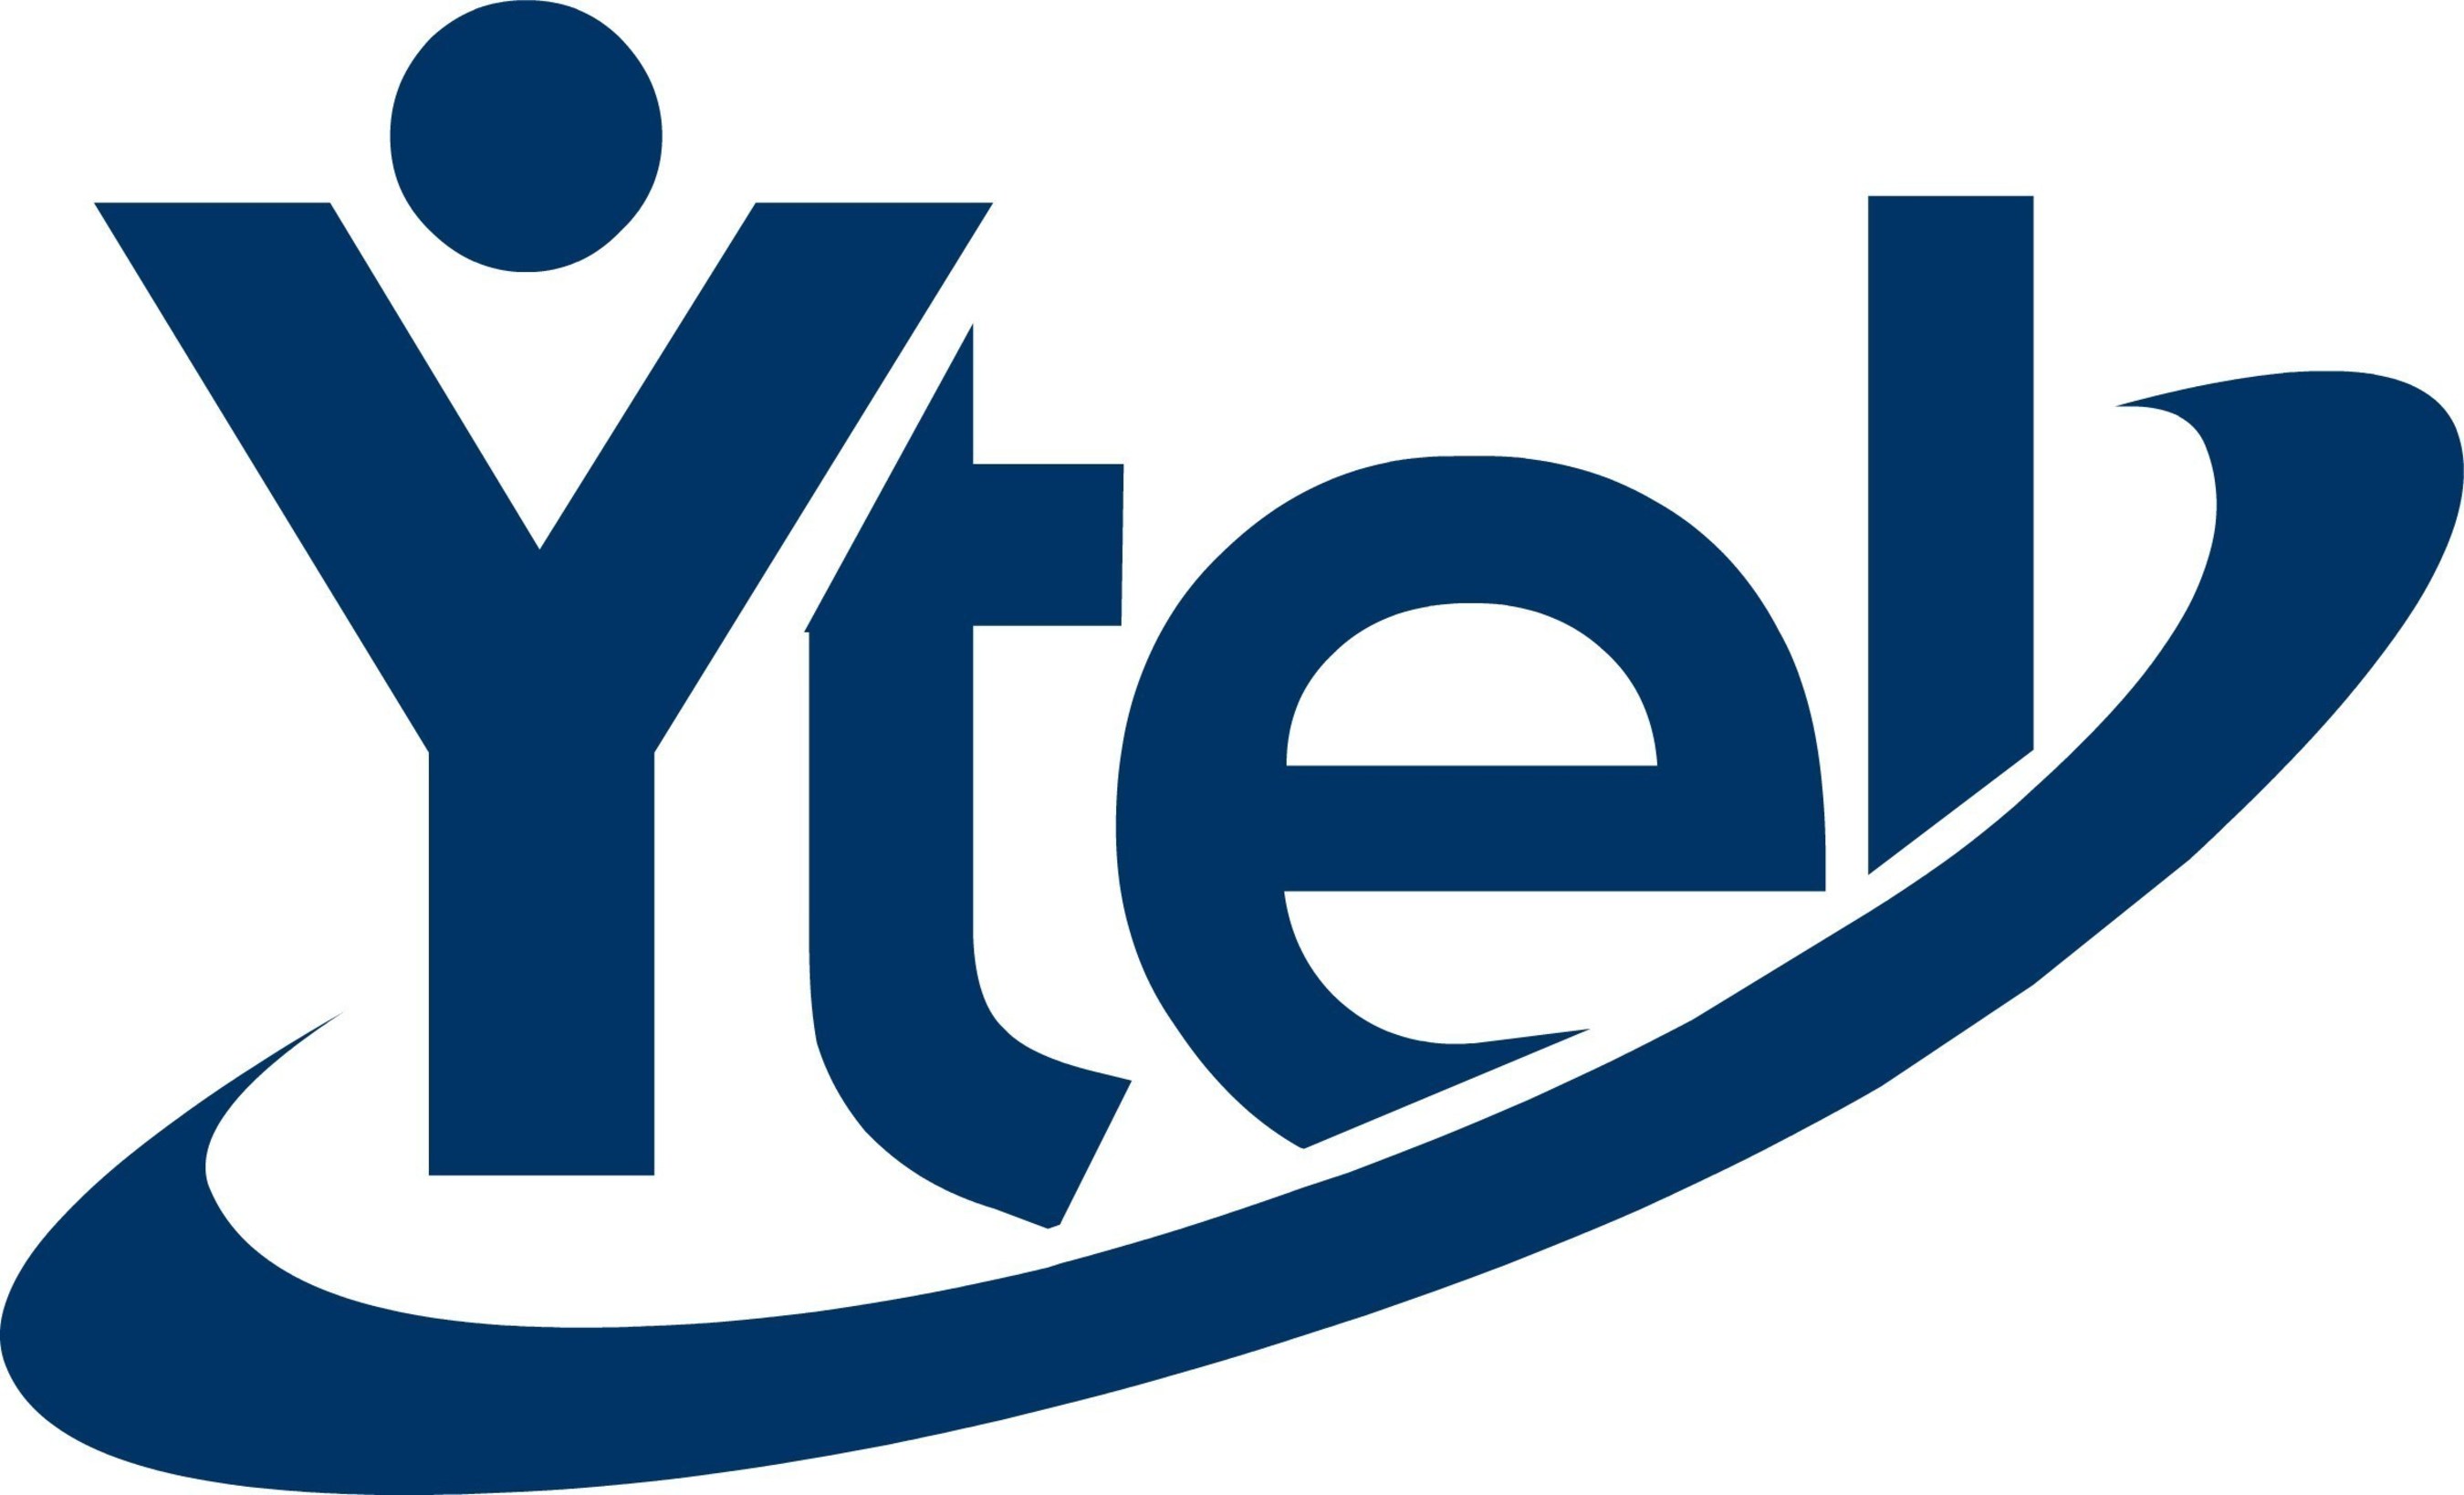 Ytel Inc. Company Logo